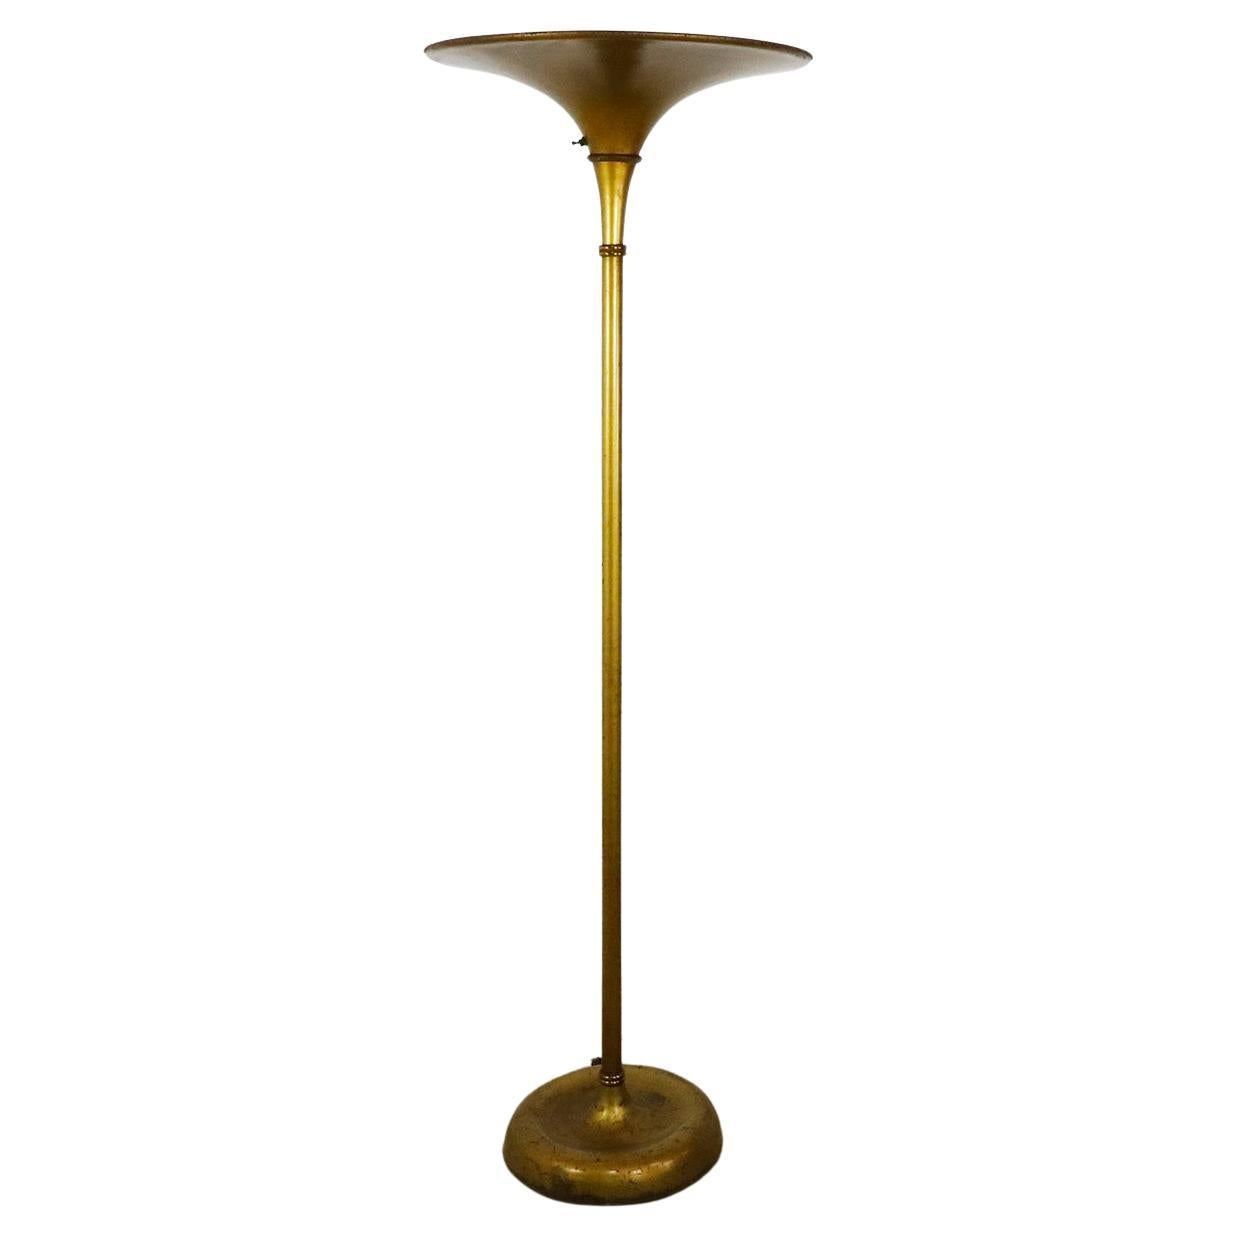 Art-Déco-Stehlampe aus goldfarbenem Aluminium mit Fackeln, 1940